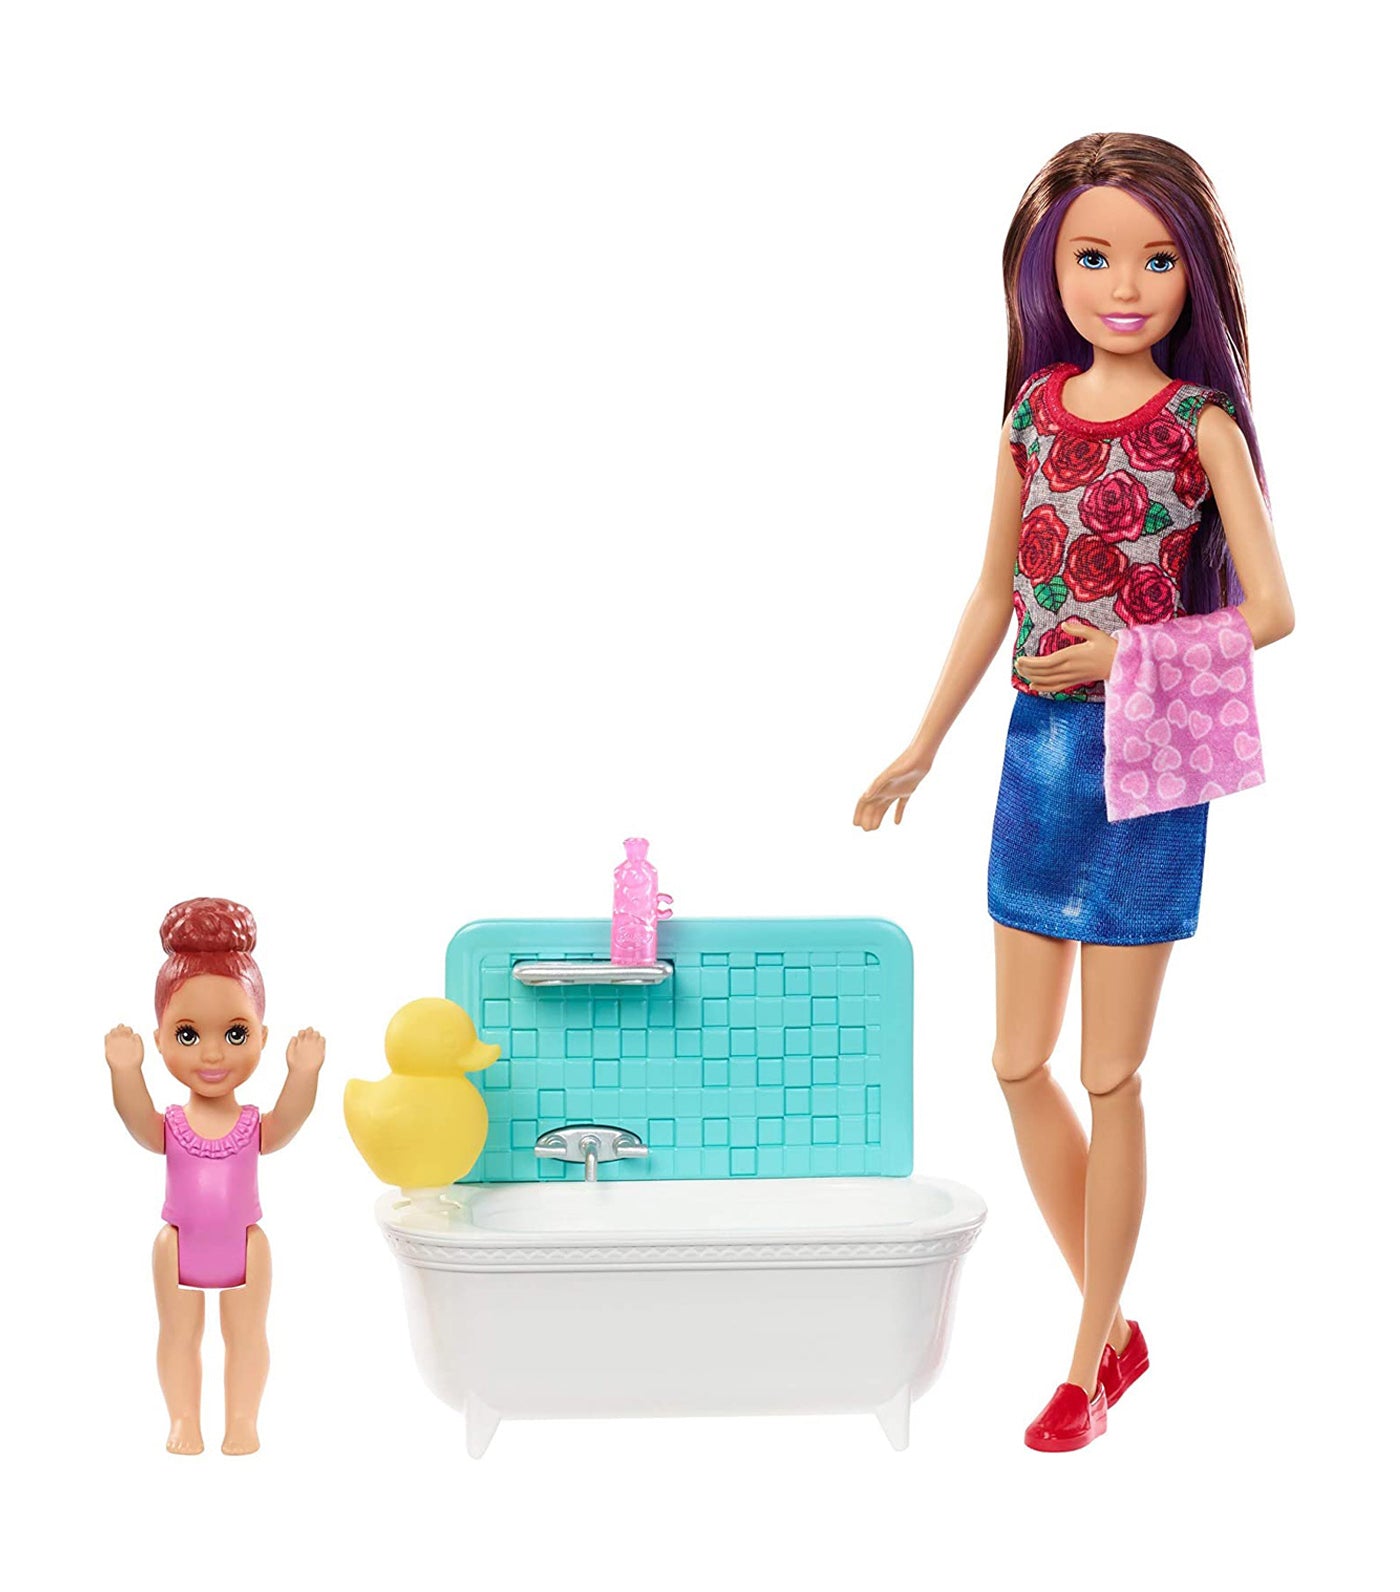 barbie® babysitters inc. playset bathtime